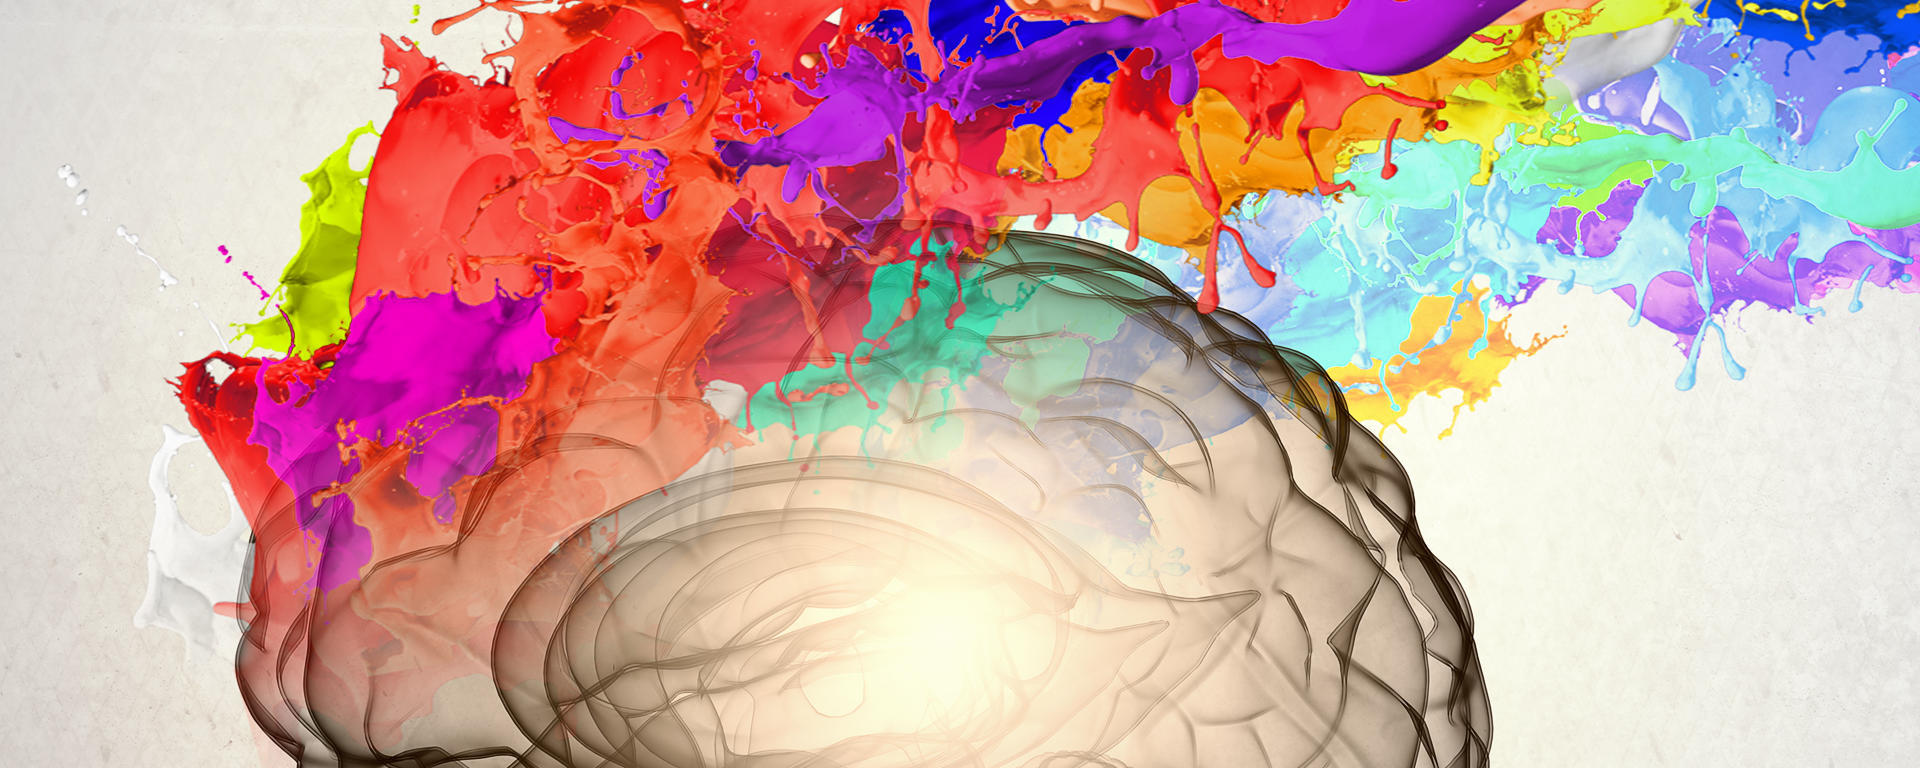 Colourful brain image